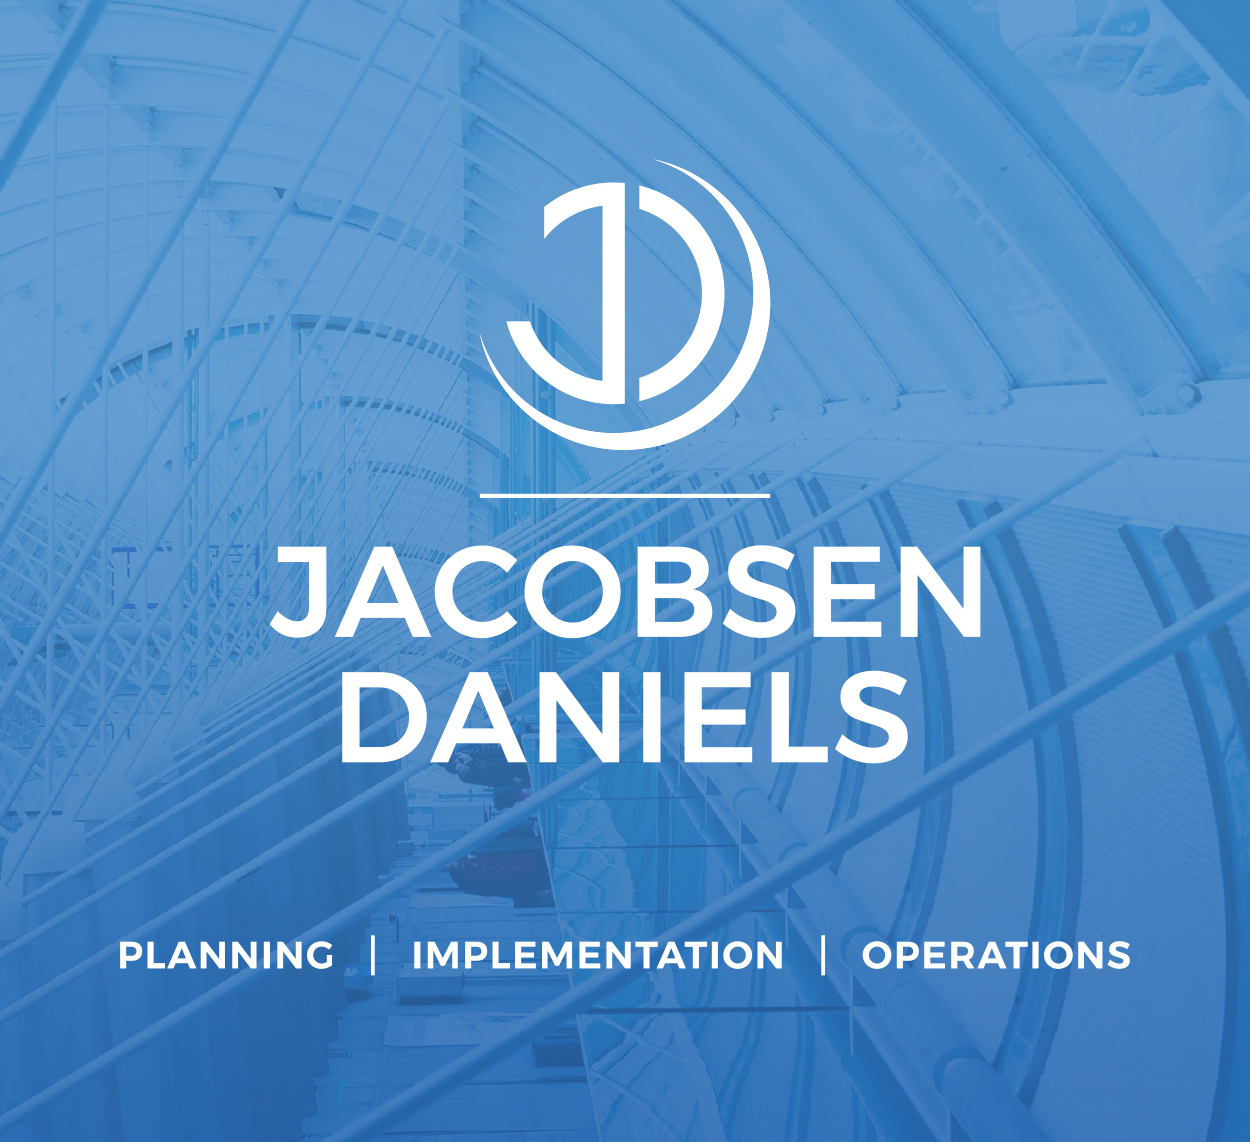 jacobsen daniels website brand development